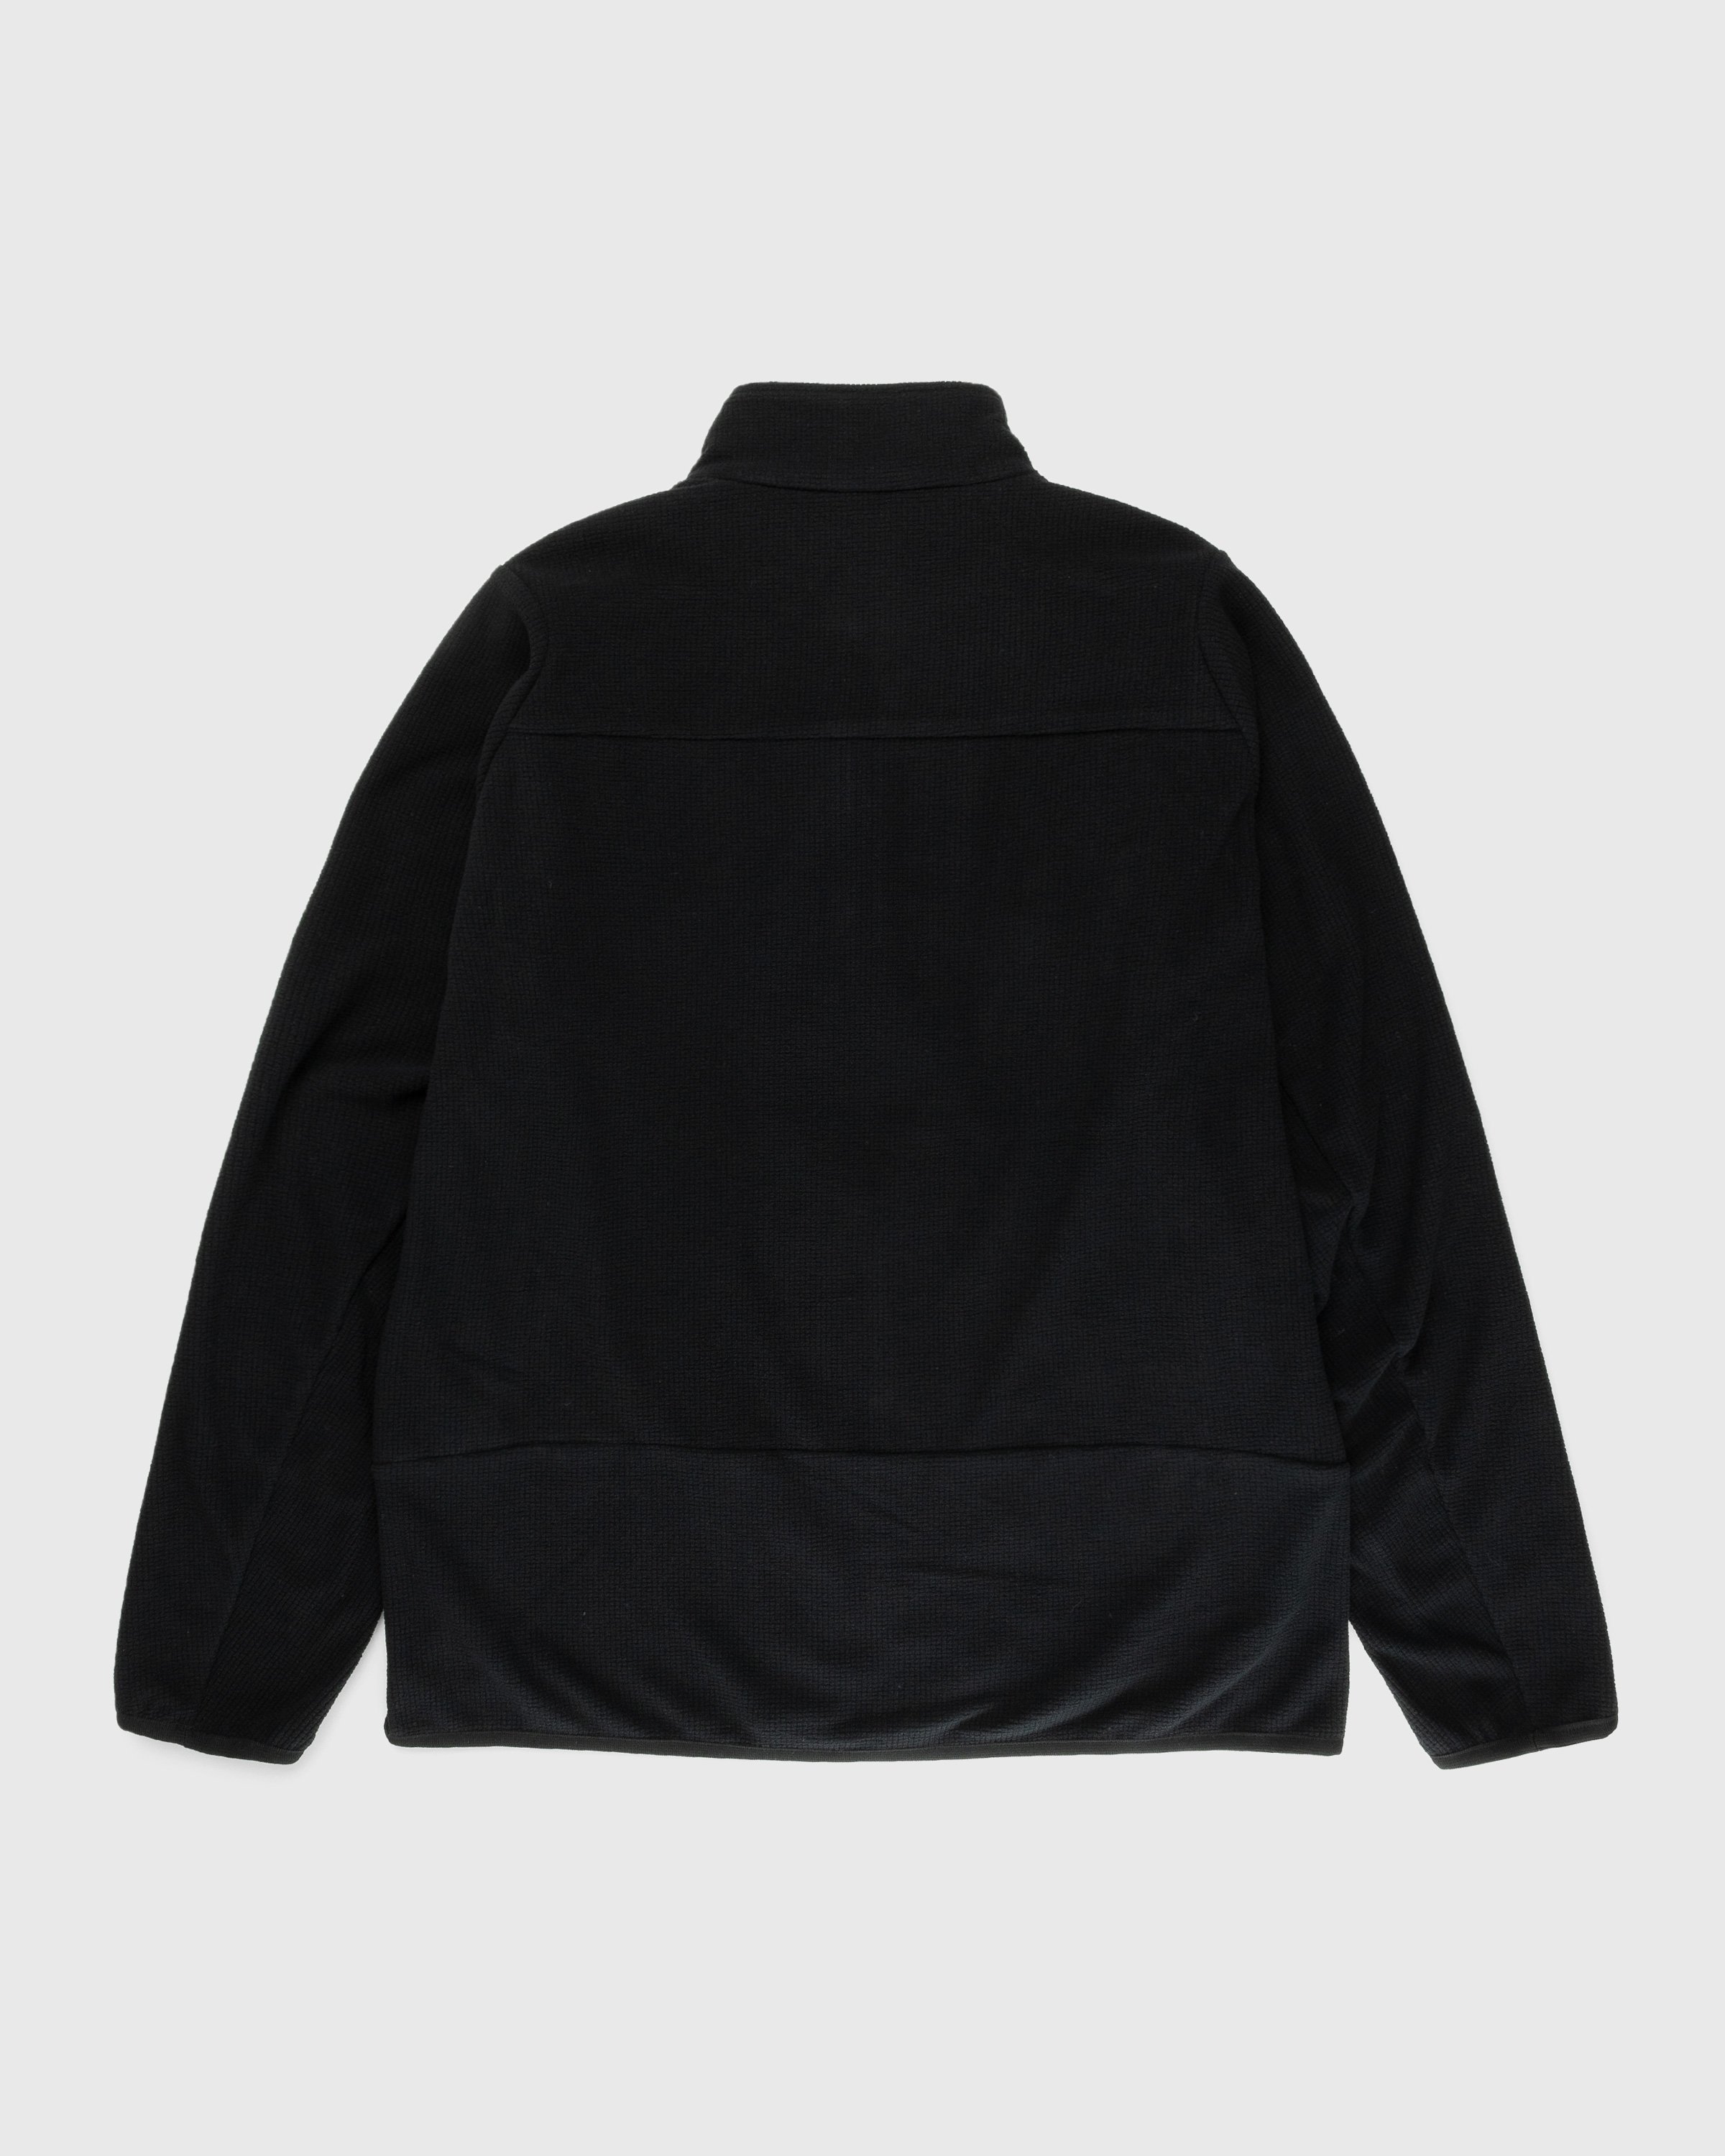 Snow Peak - Grid Fleece Jacket Black - Clothing - Black - Image 2